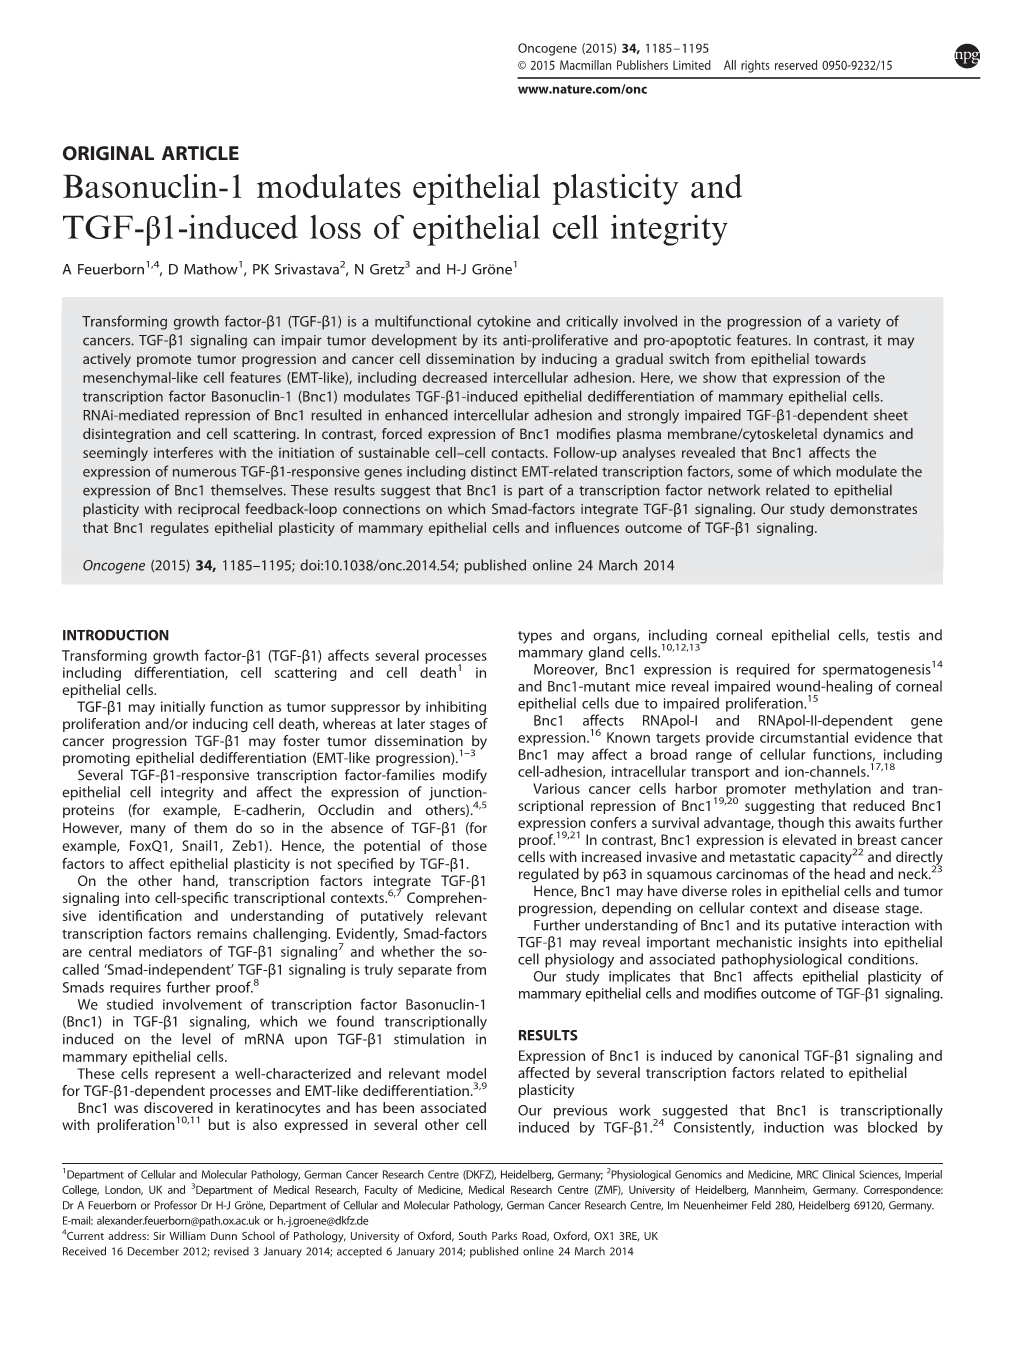 Basonuclin-1 Modulates Epithelial Plasticity and TGF-&Beta